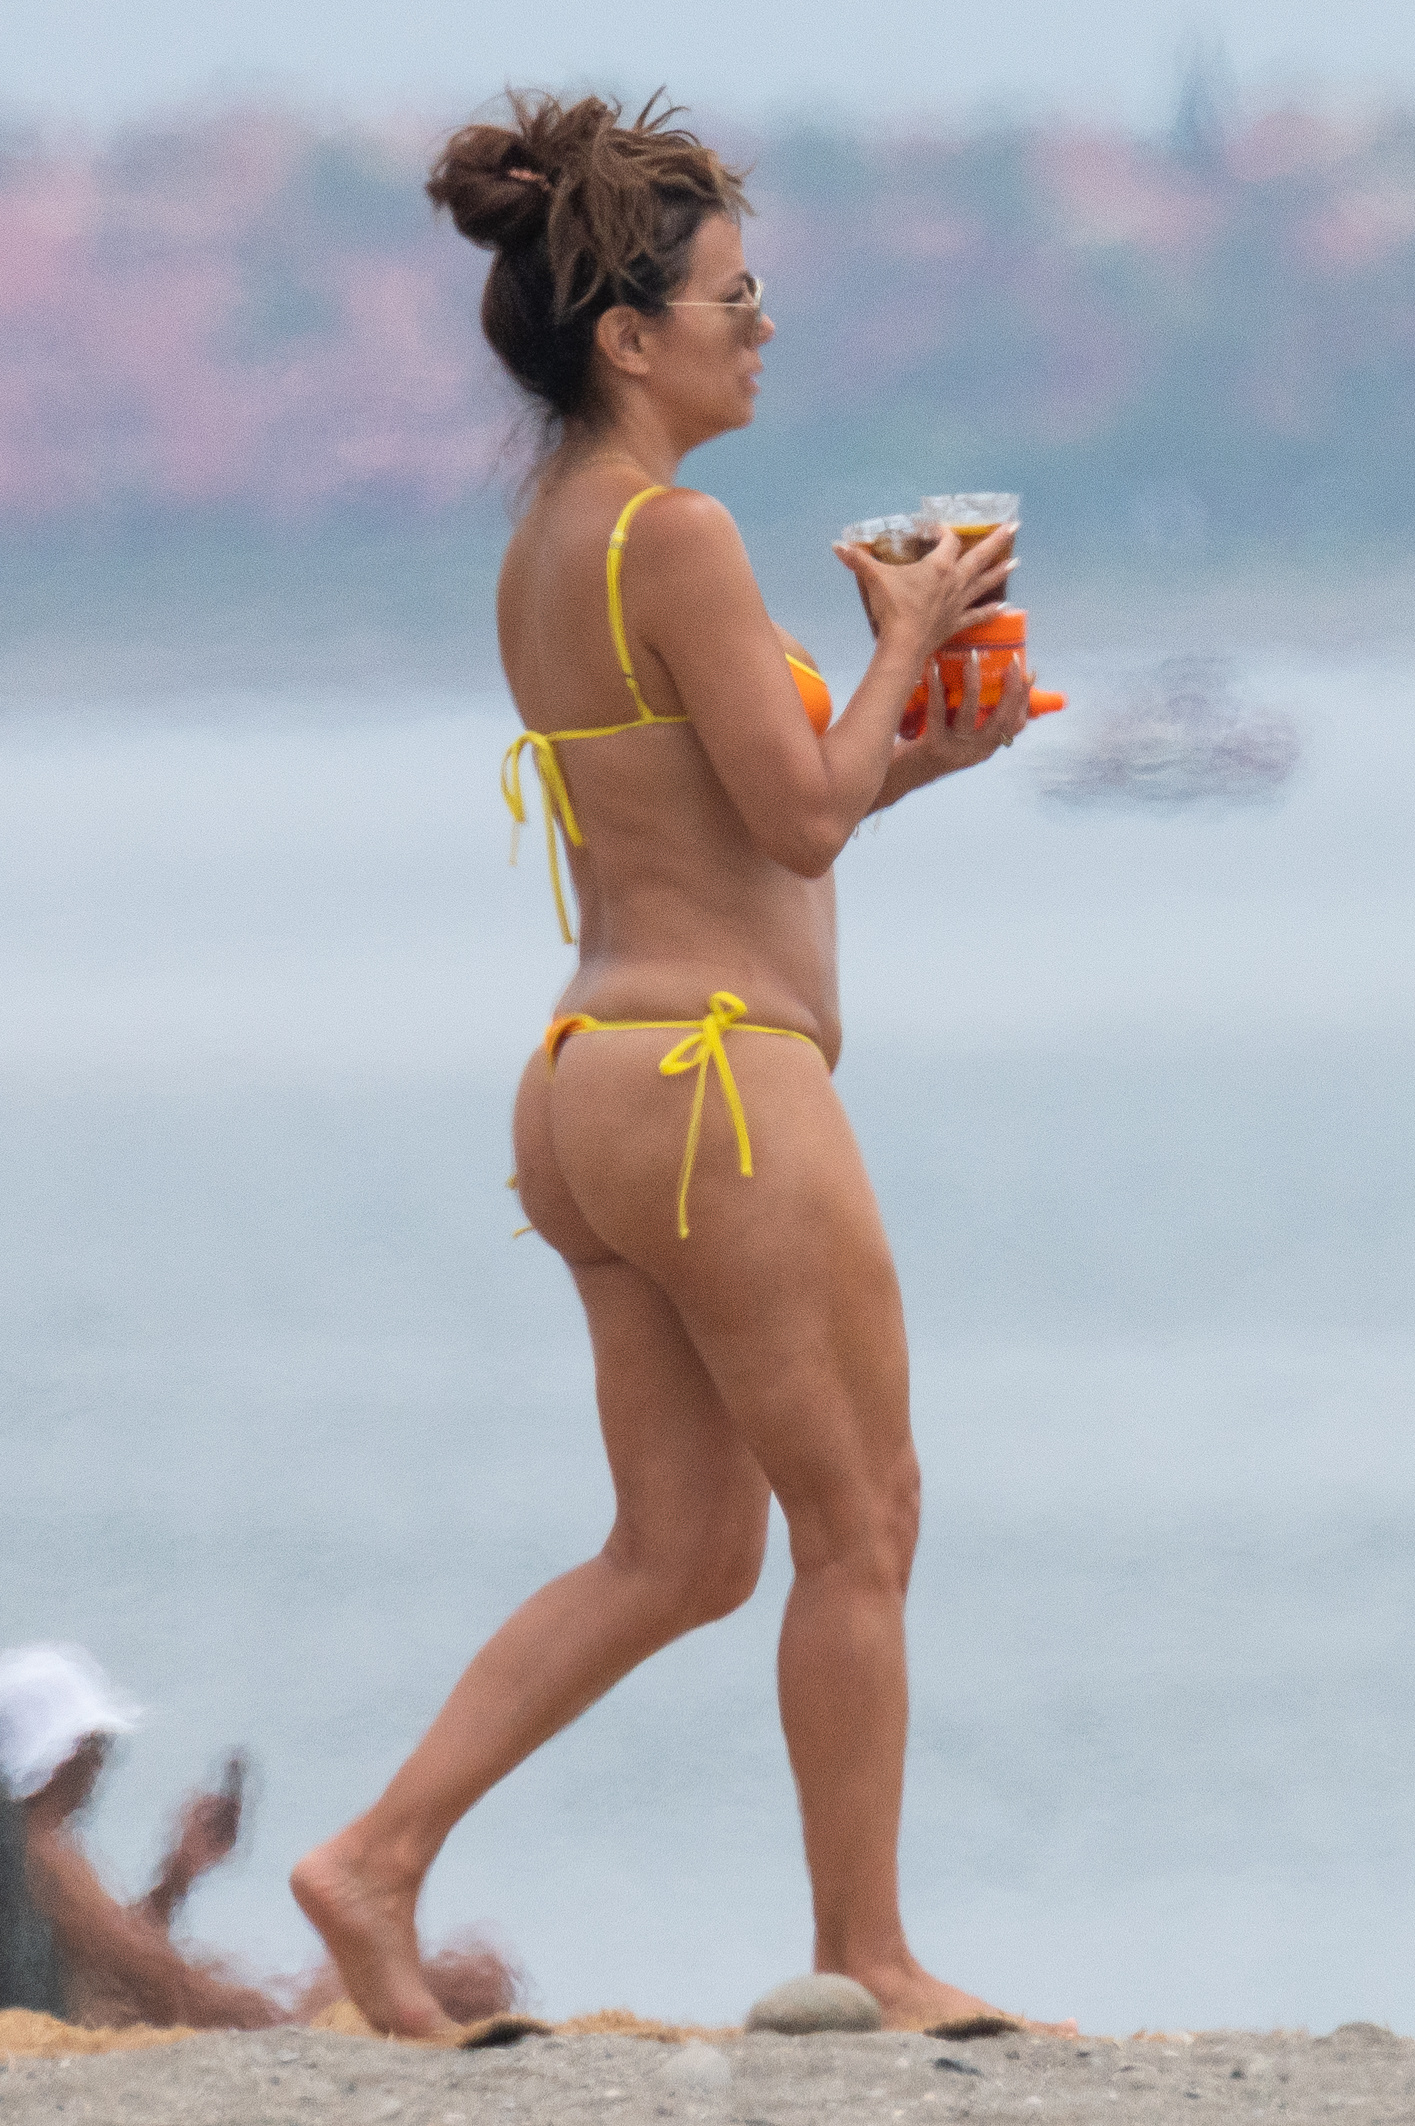 Eva Longoria wearing a multi-colored bikini while enjoying a summer day at the beach in Spain